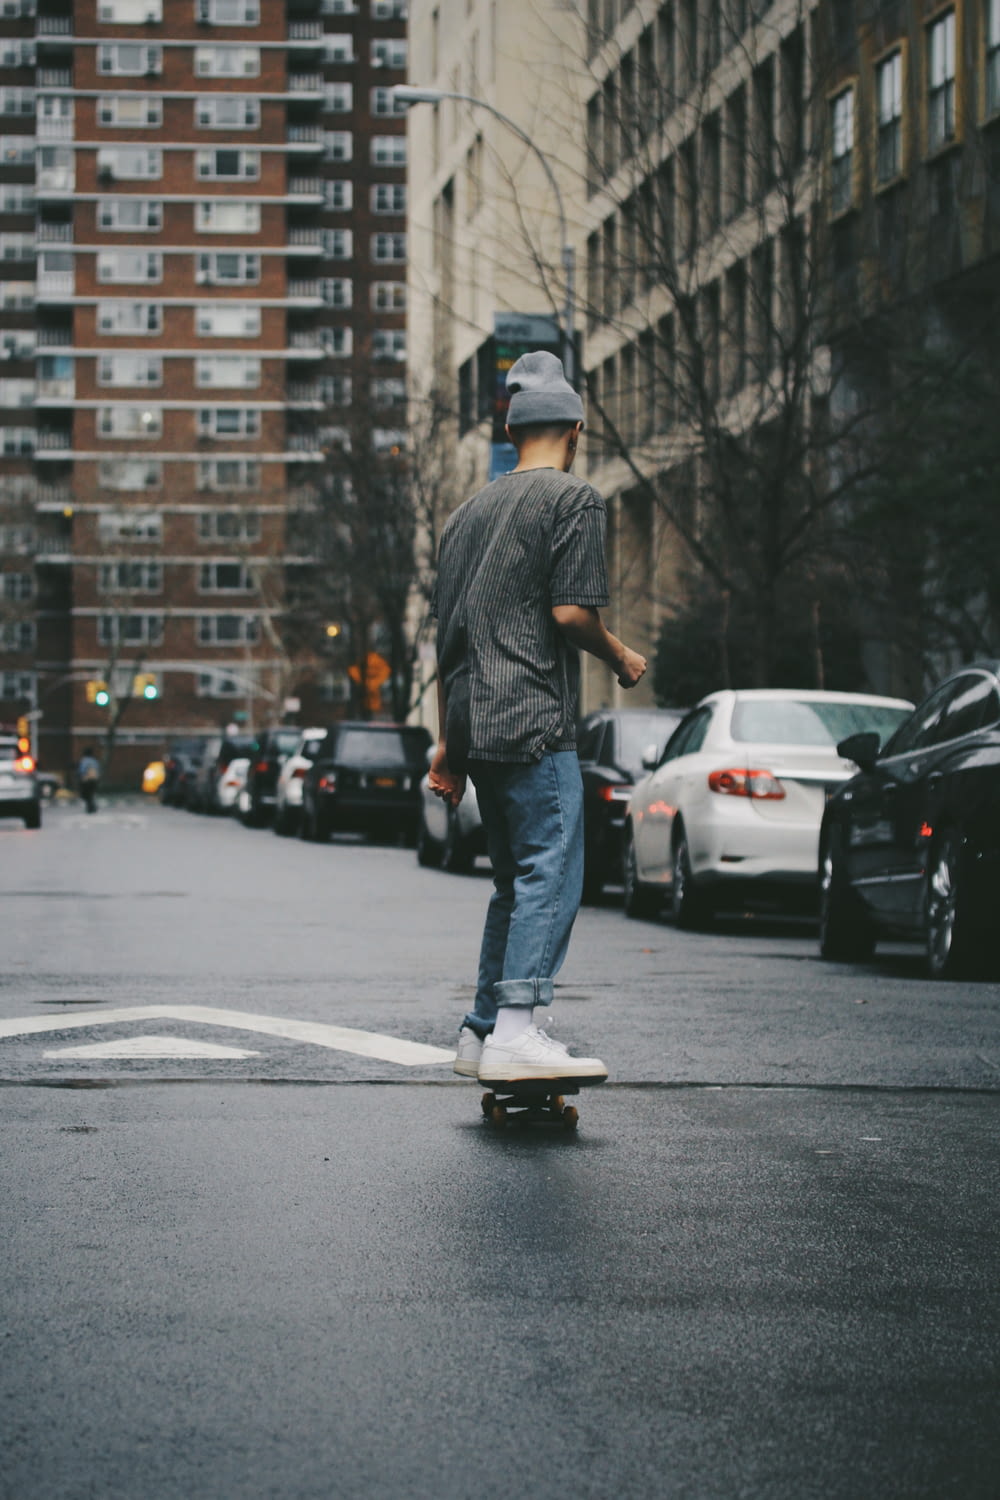 man riding skateboard near high rise building